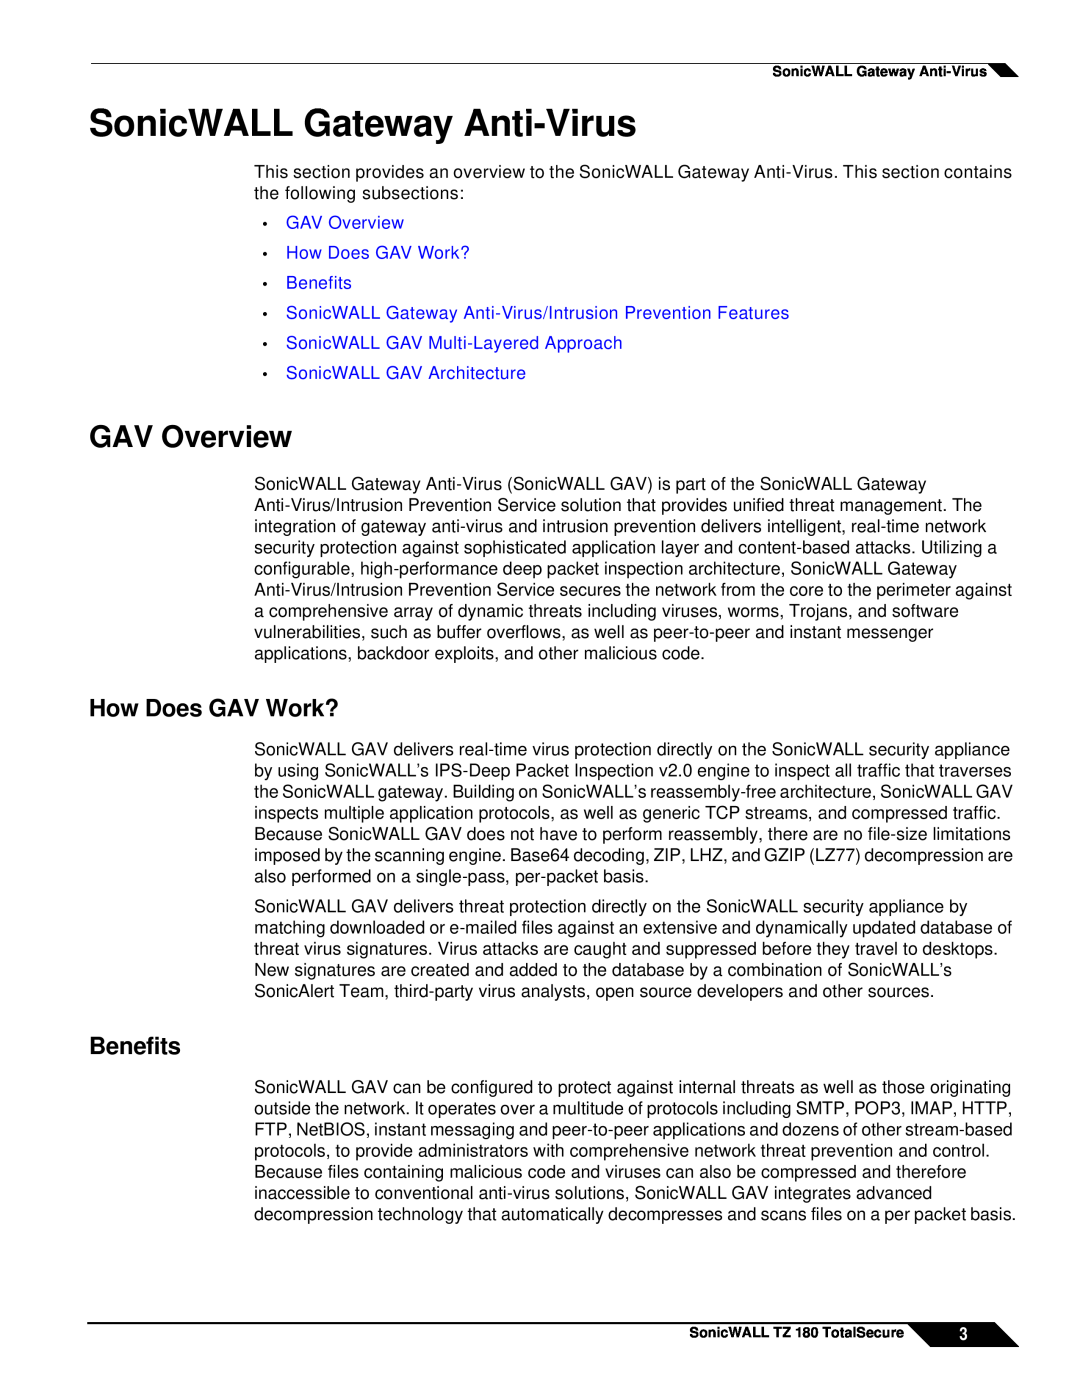 SonicWALL TZ 180 manual SonicWALL Gateway Anti-Virus, GAV Overview, How Does GAV Work?, Benefits 